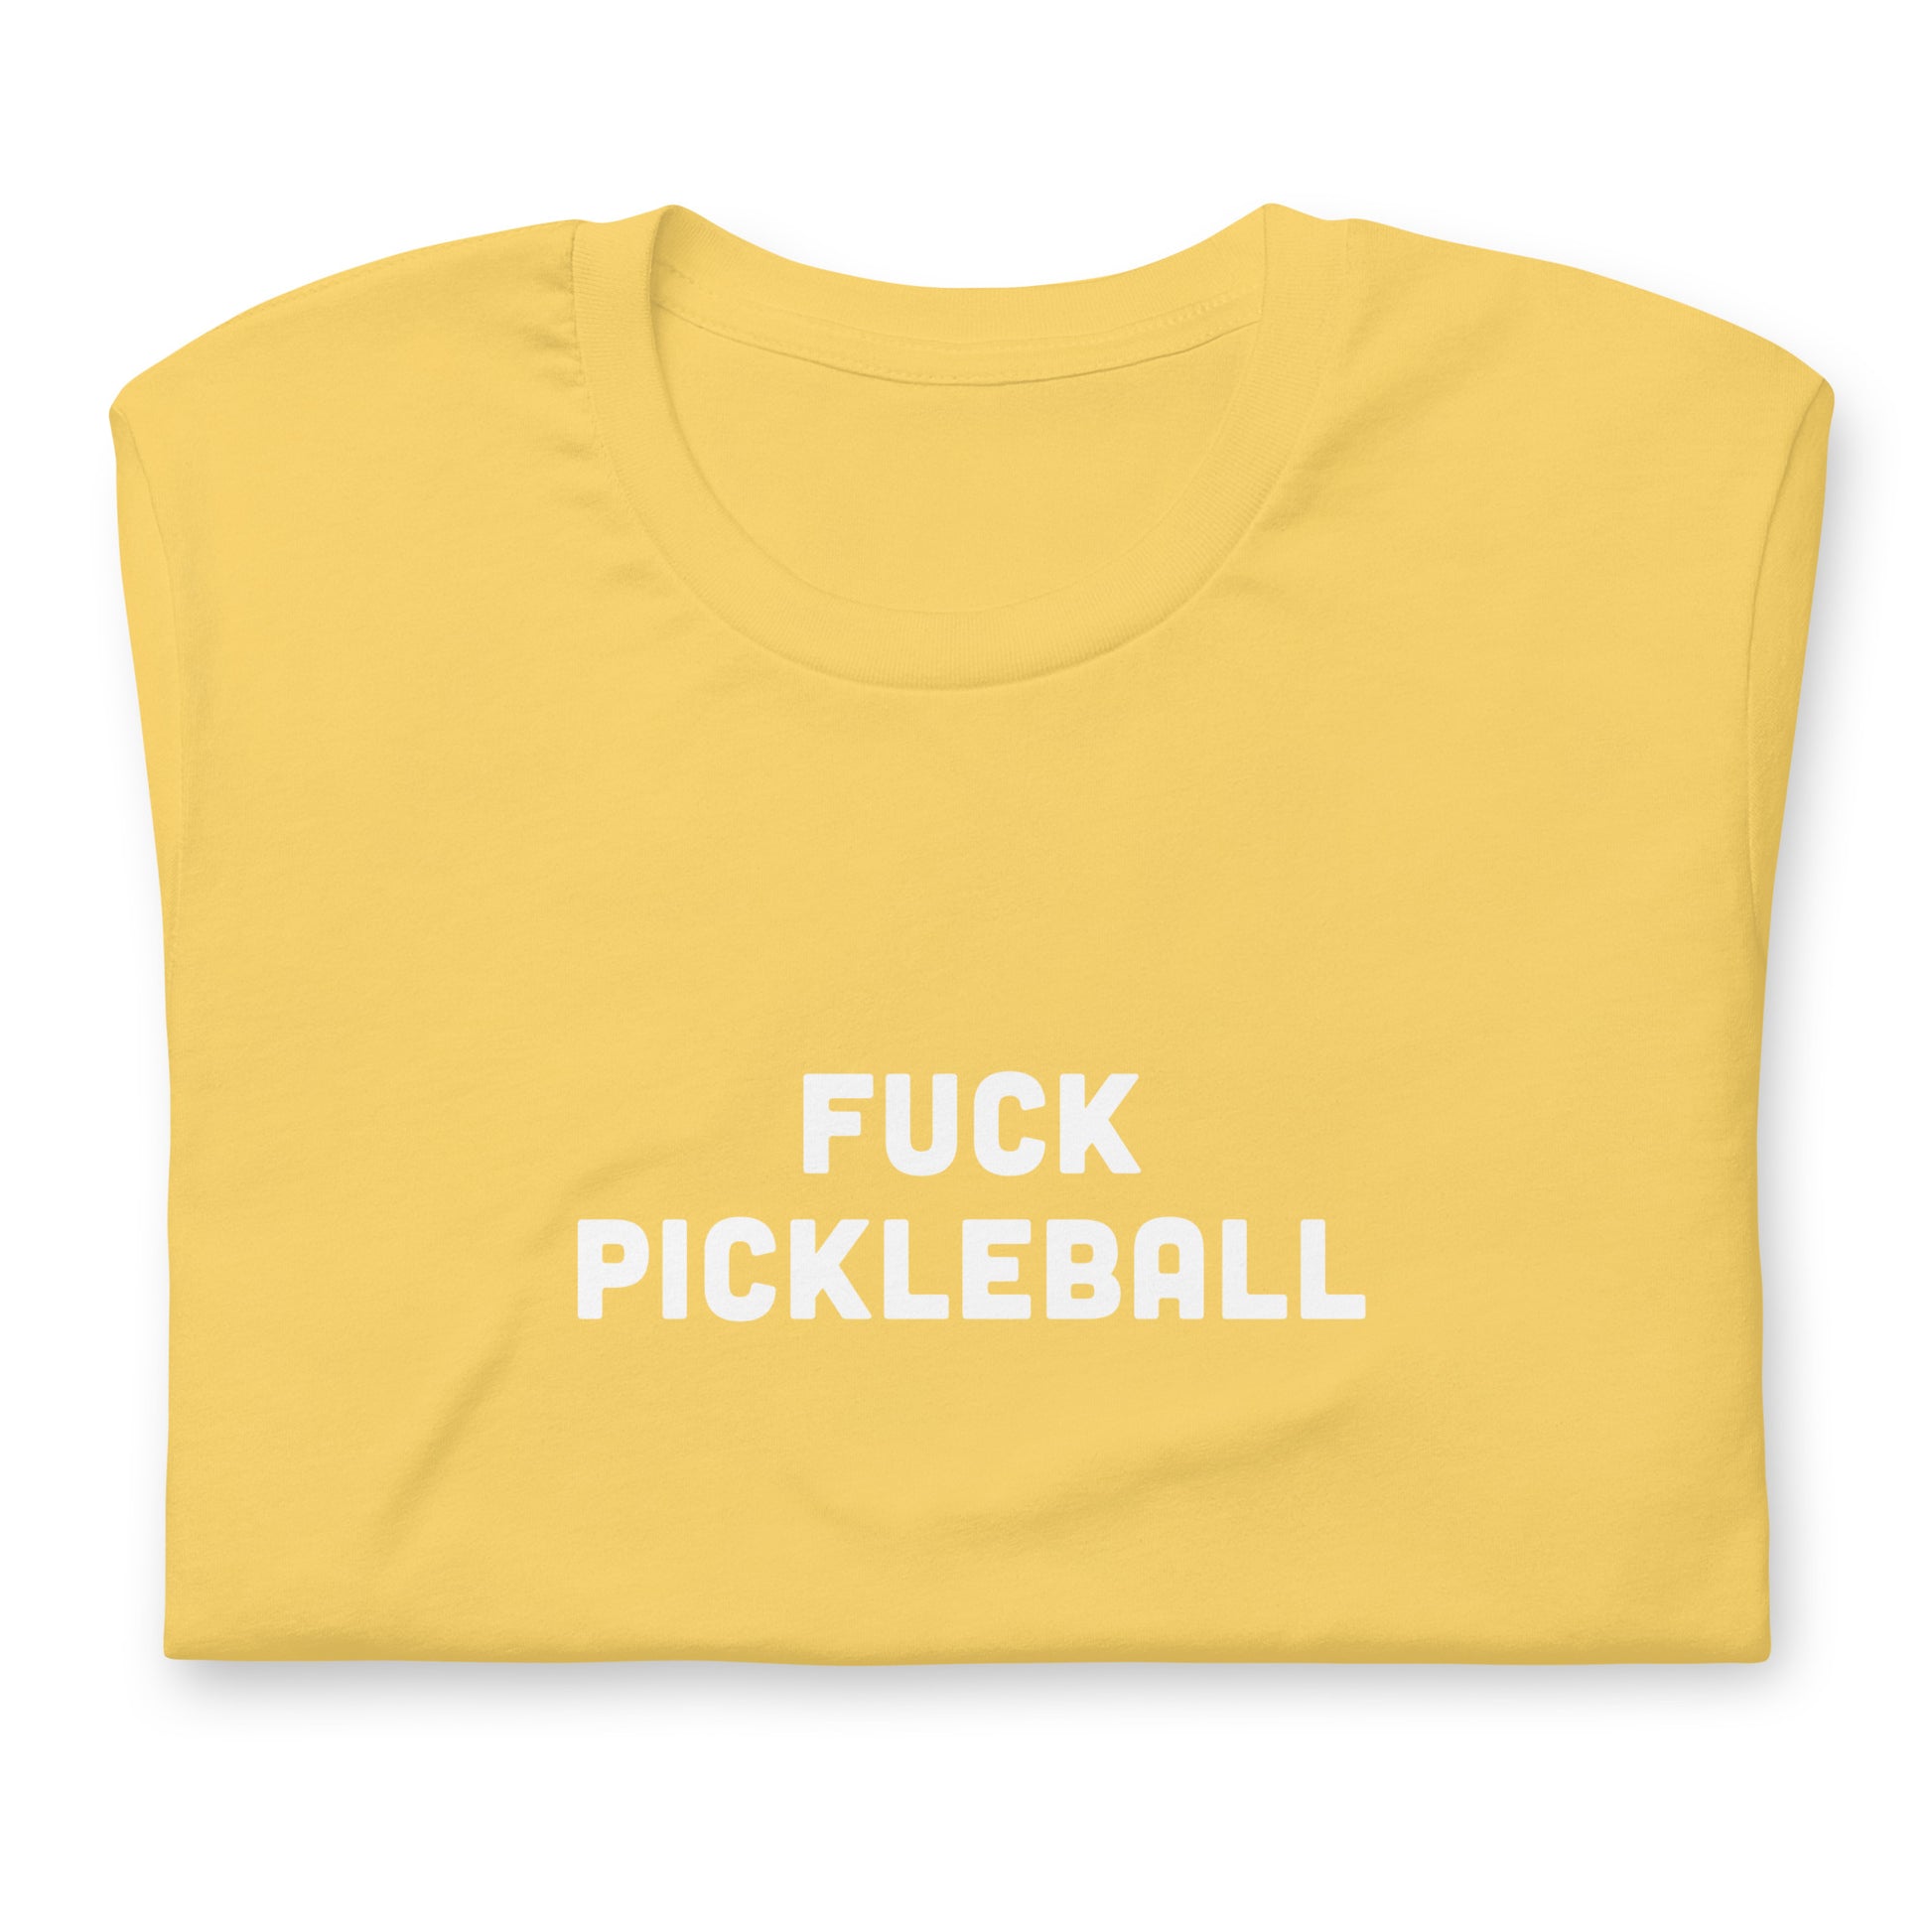 Fuck Pickleball T-Shirt Size XL Color Asphalt